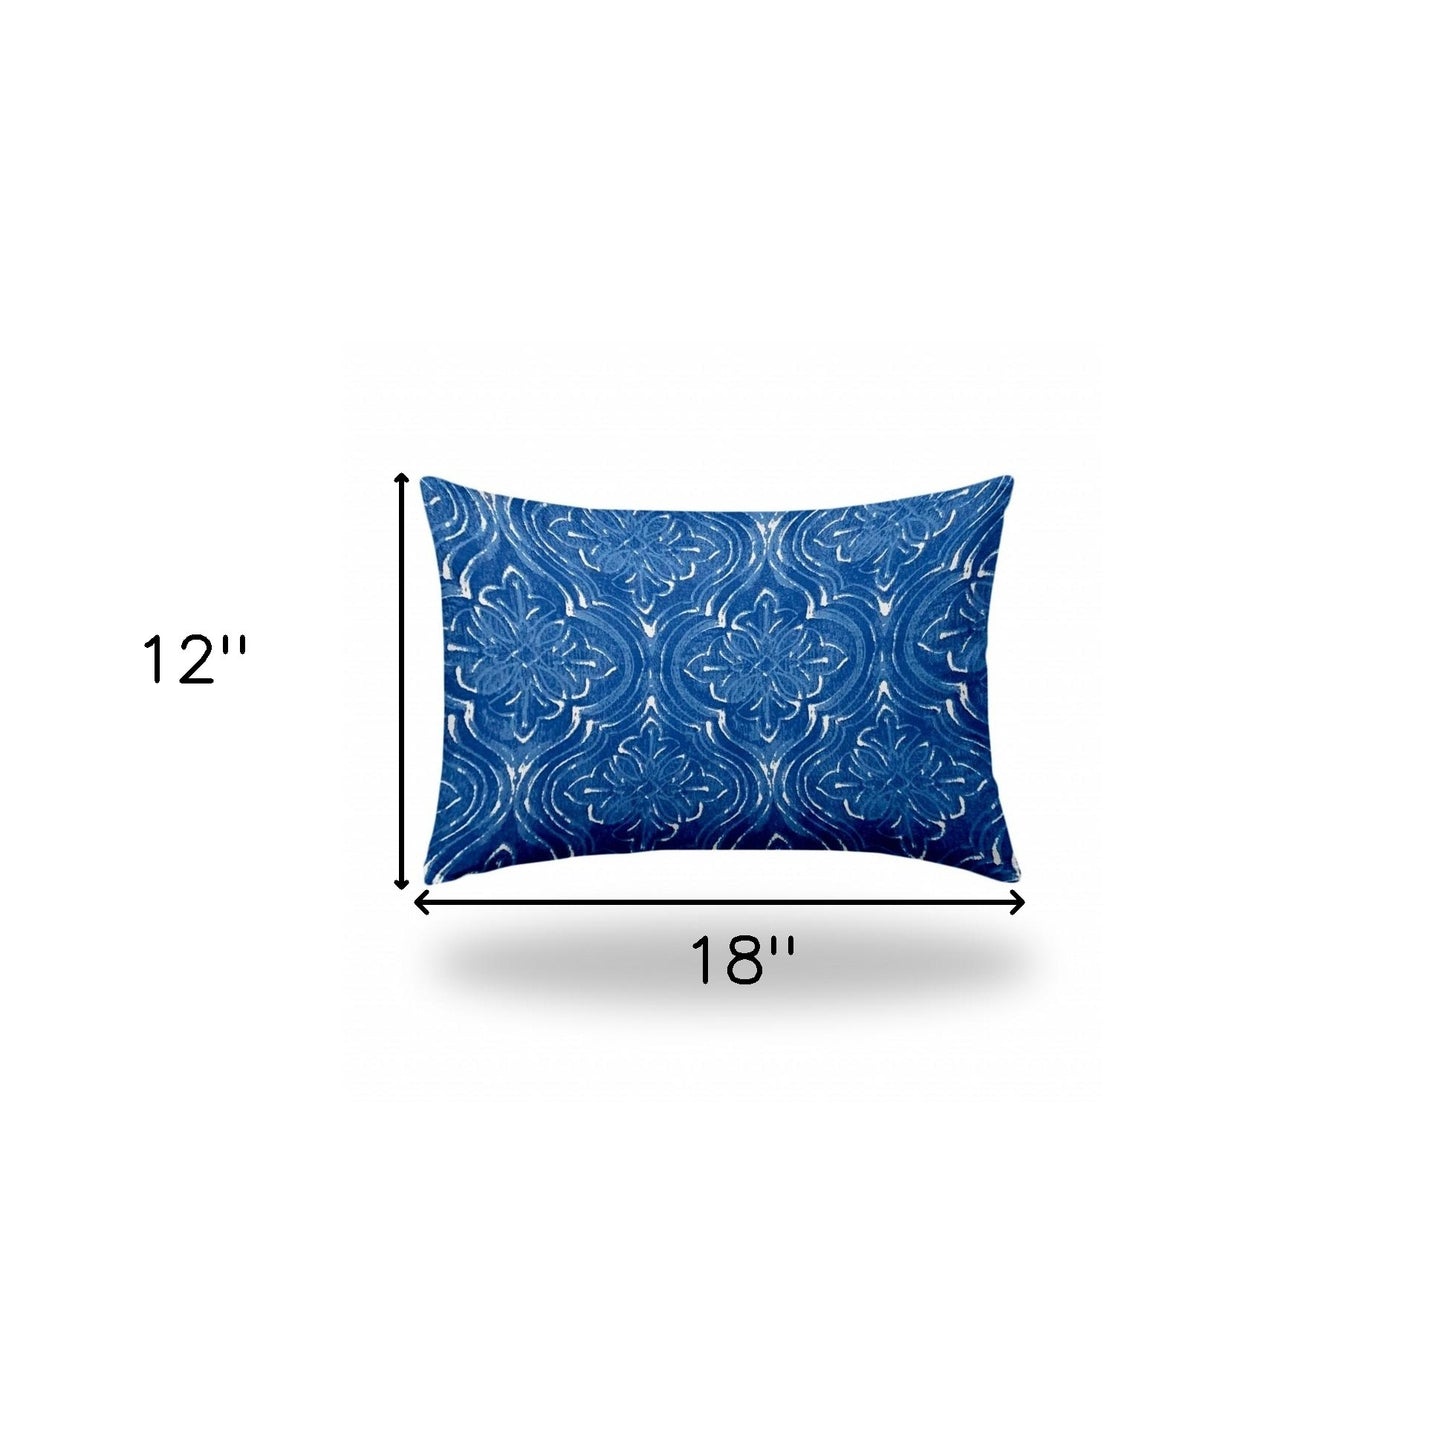 12" X 18" Blue And White Enveloped Ikat Lumbar Indoor Outdoor Pillow